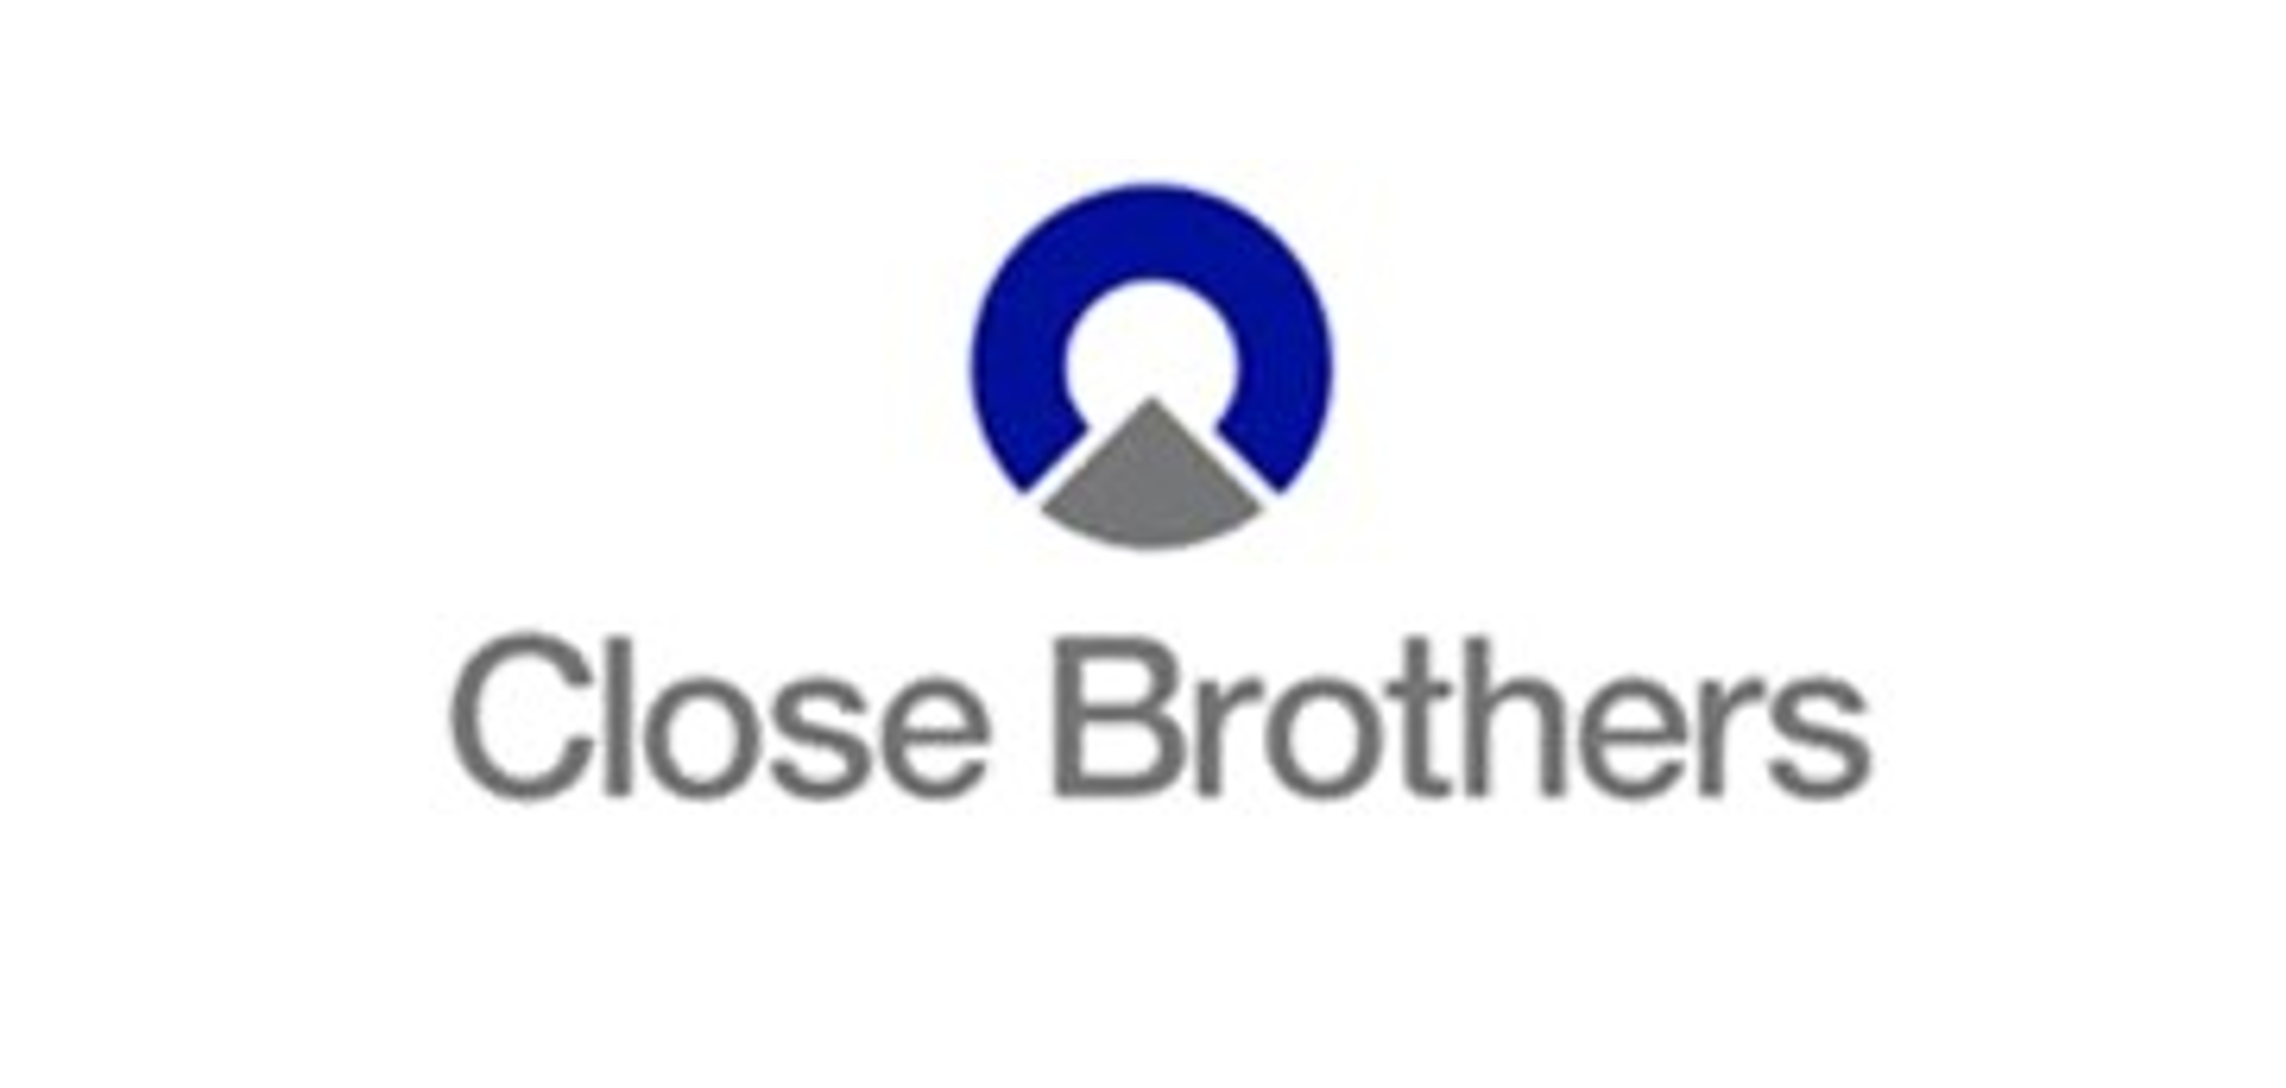 close brothers logo